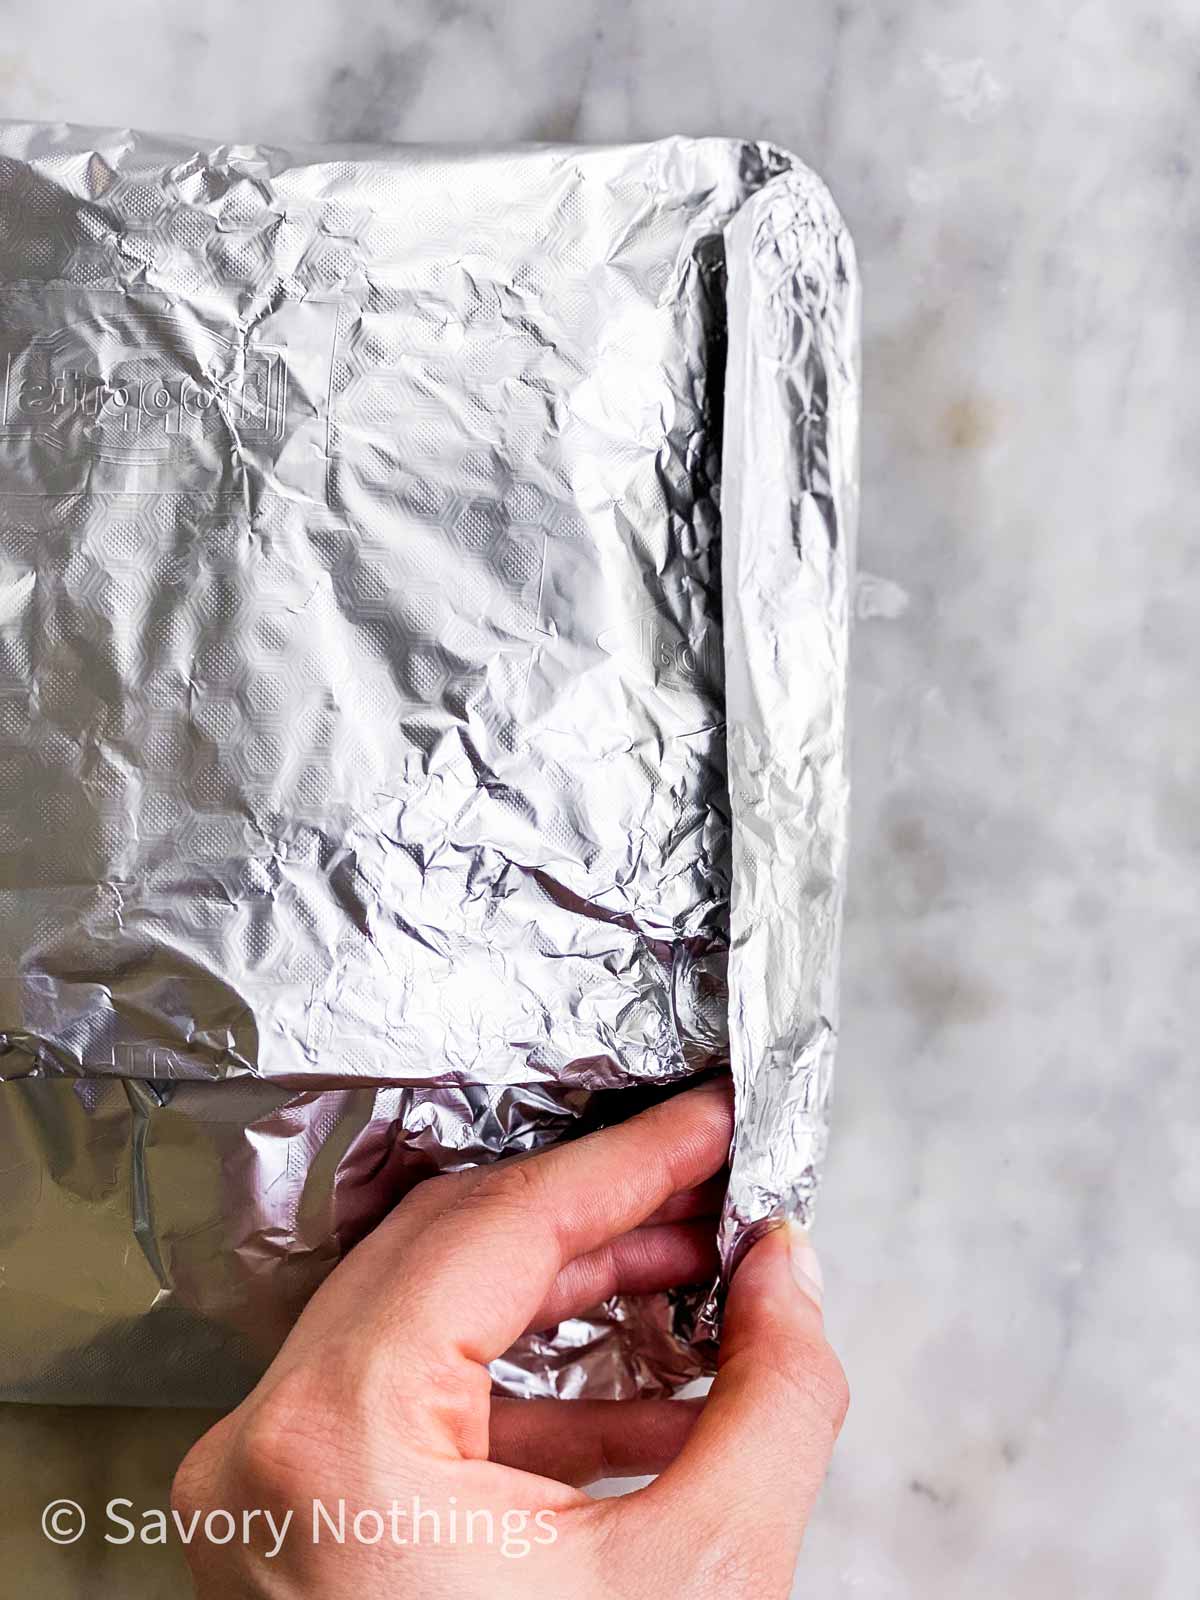 female hand sealing edge of foil packet